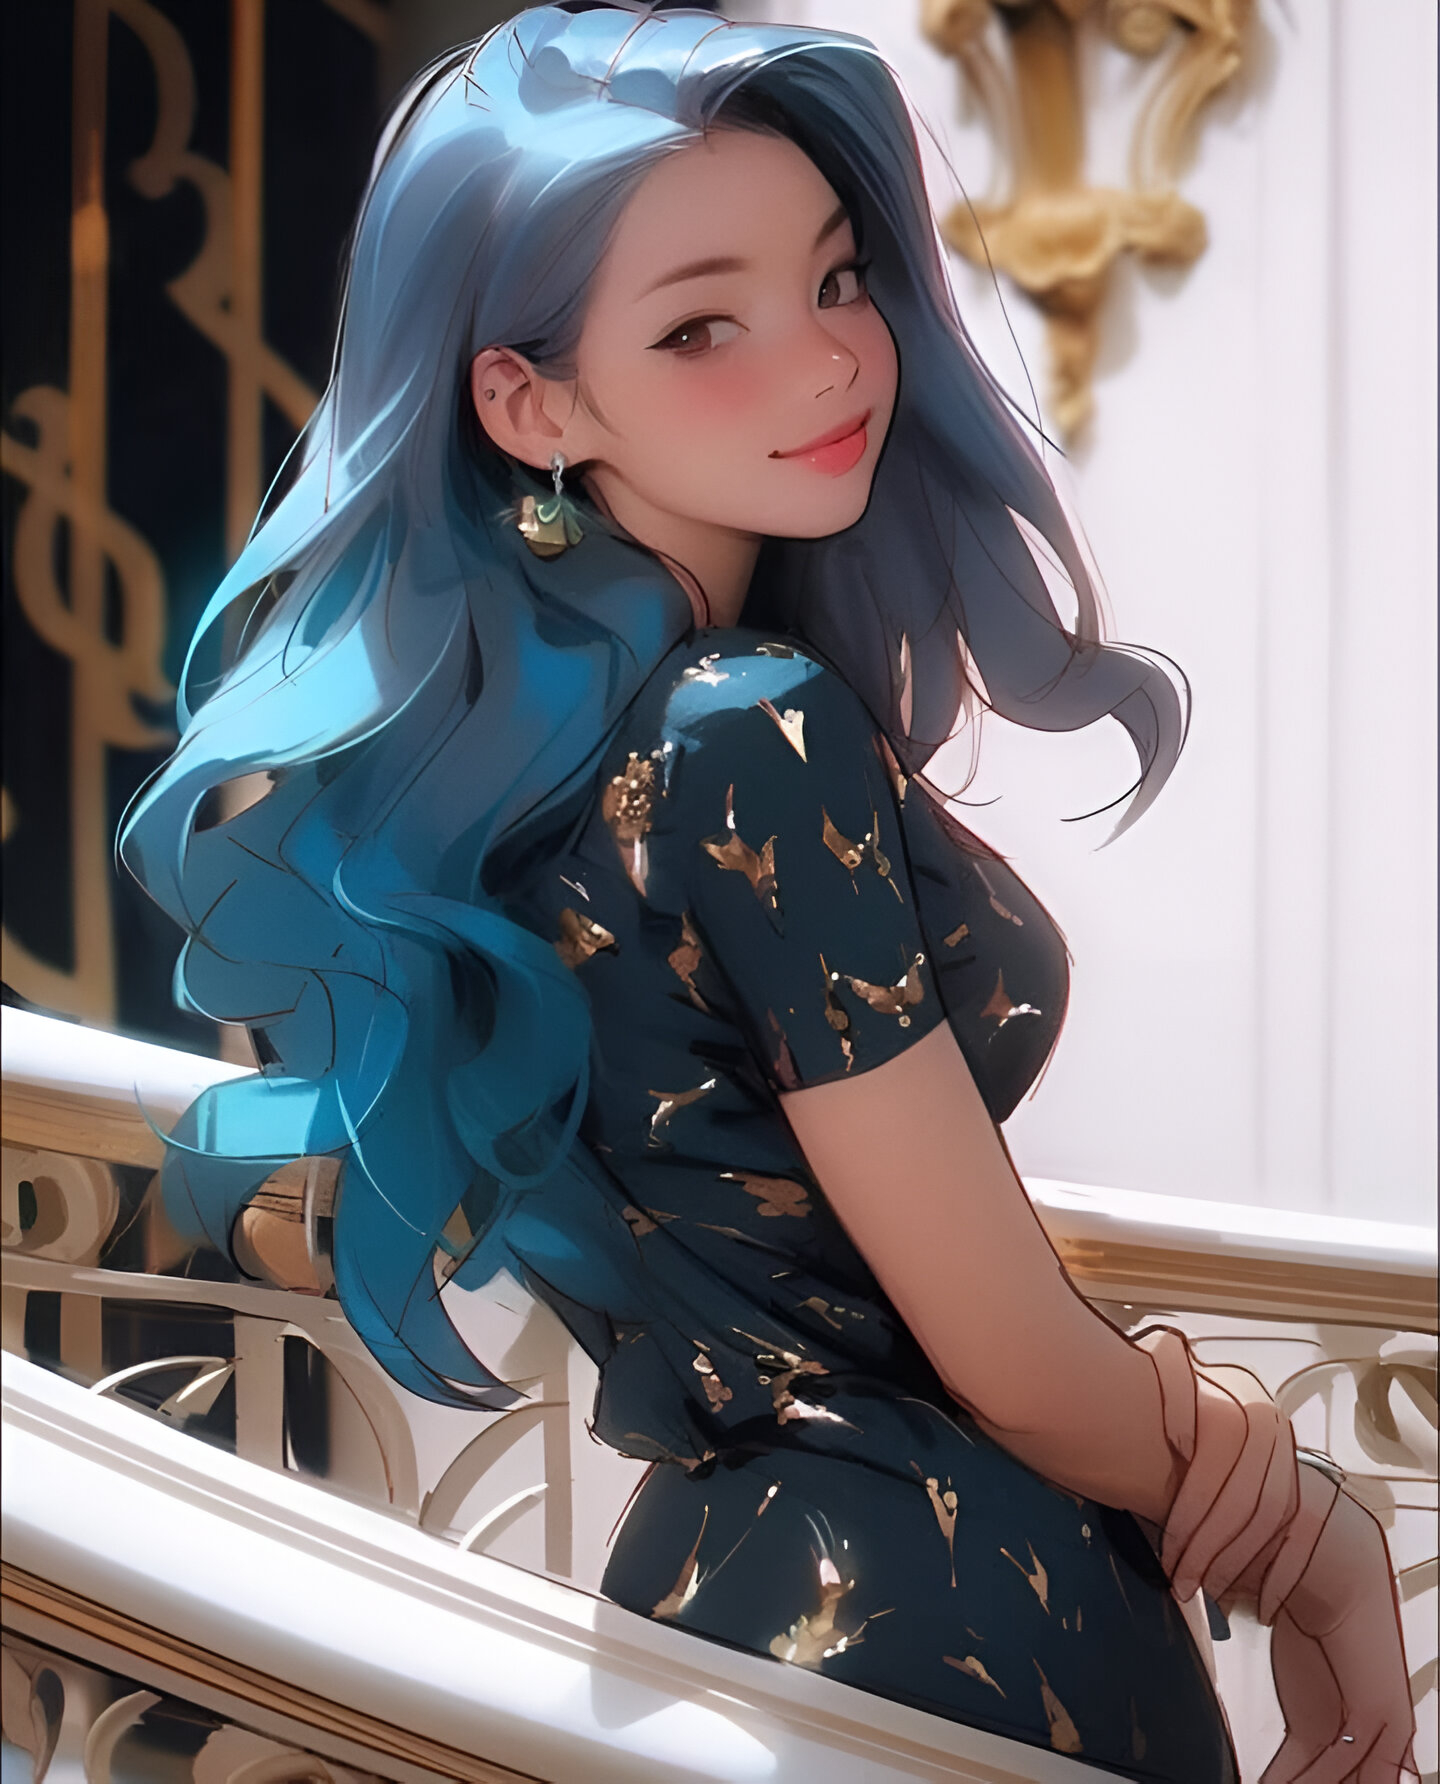 Blue Hair Girl